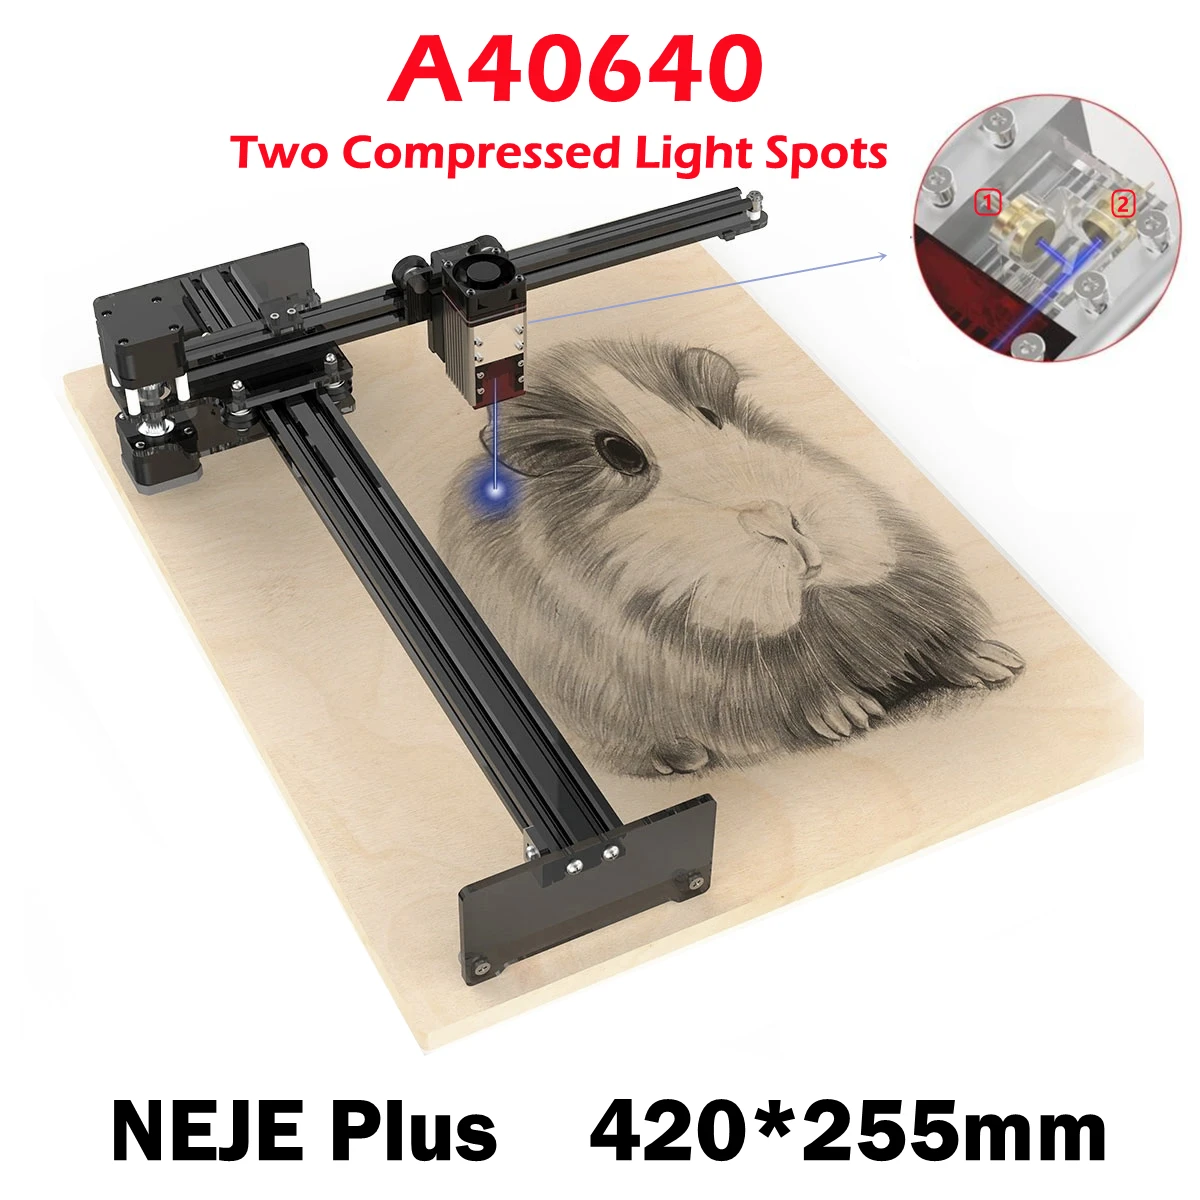 

NEJE Plus A40640 CNC 80W Laser Wood Cutter Engraver Engraving Machine DIY Mini Printer Metal Mark Tool Bluetooth Lightburn GRBL